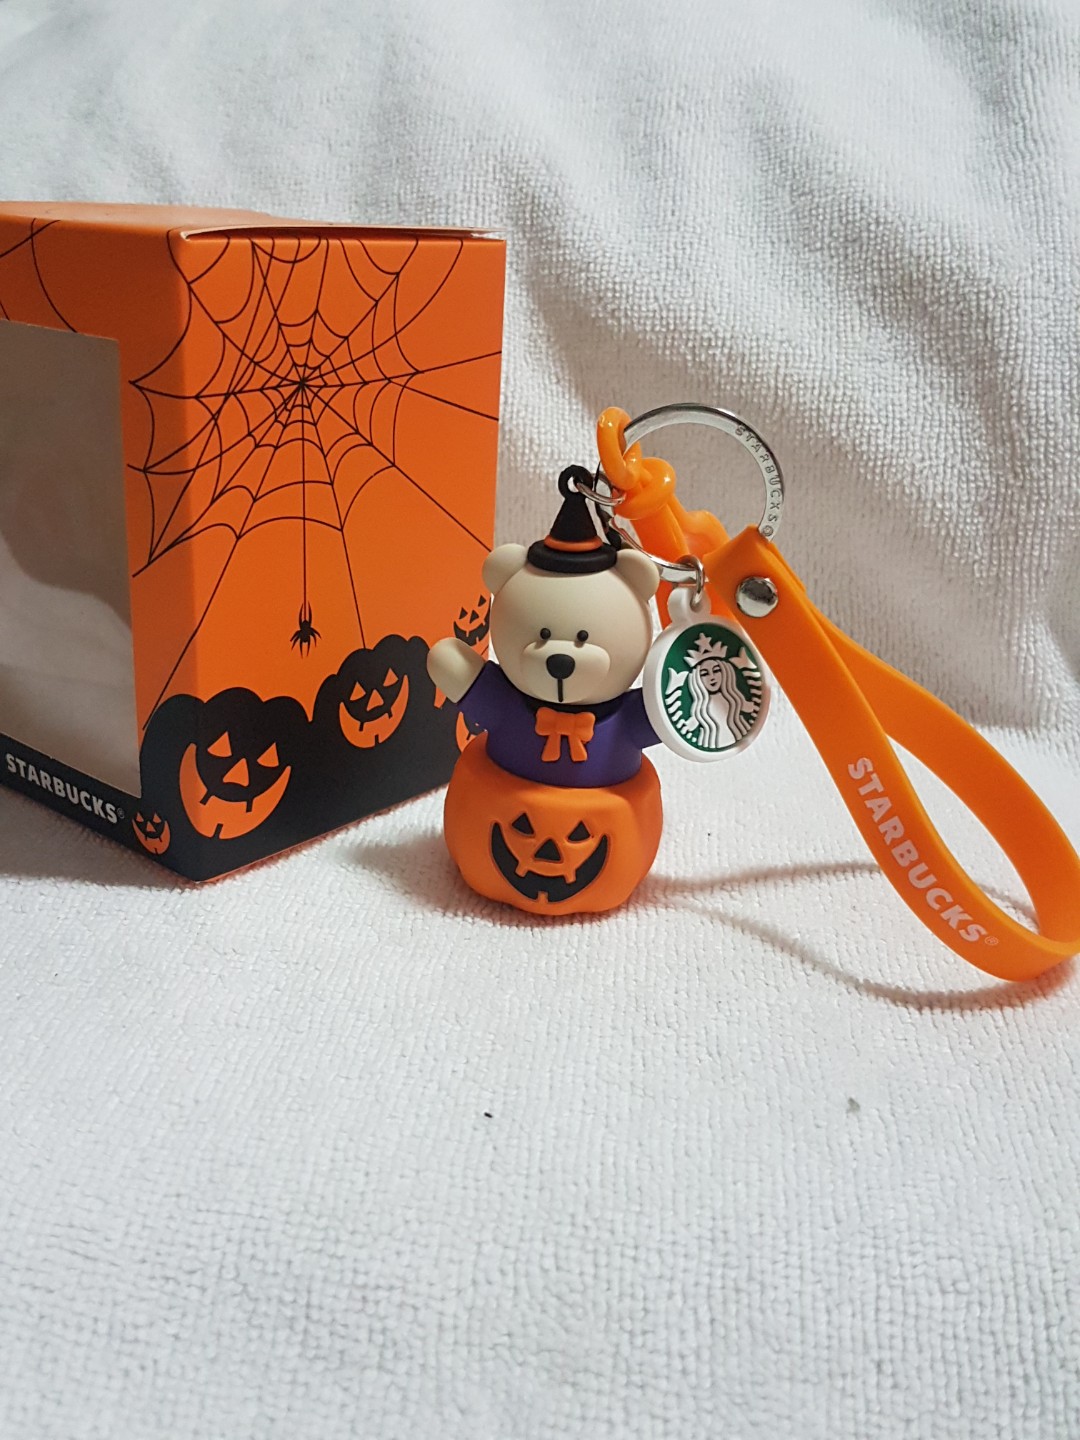 Personalized Starbucks Keychain Deluxe Halloween Gift 